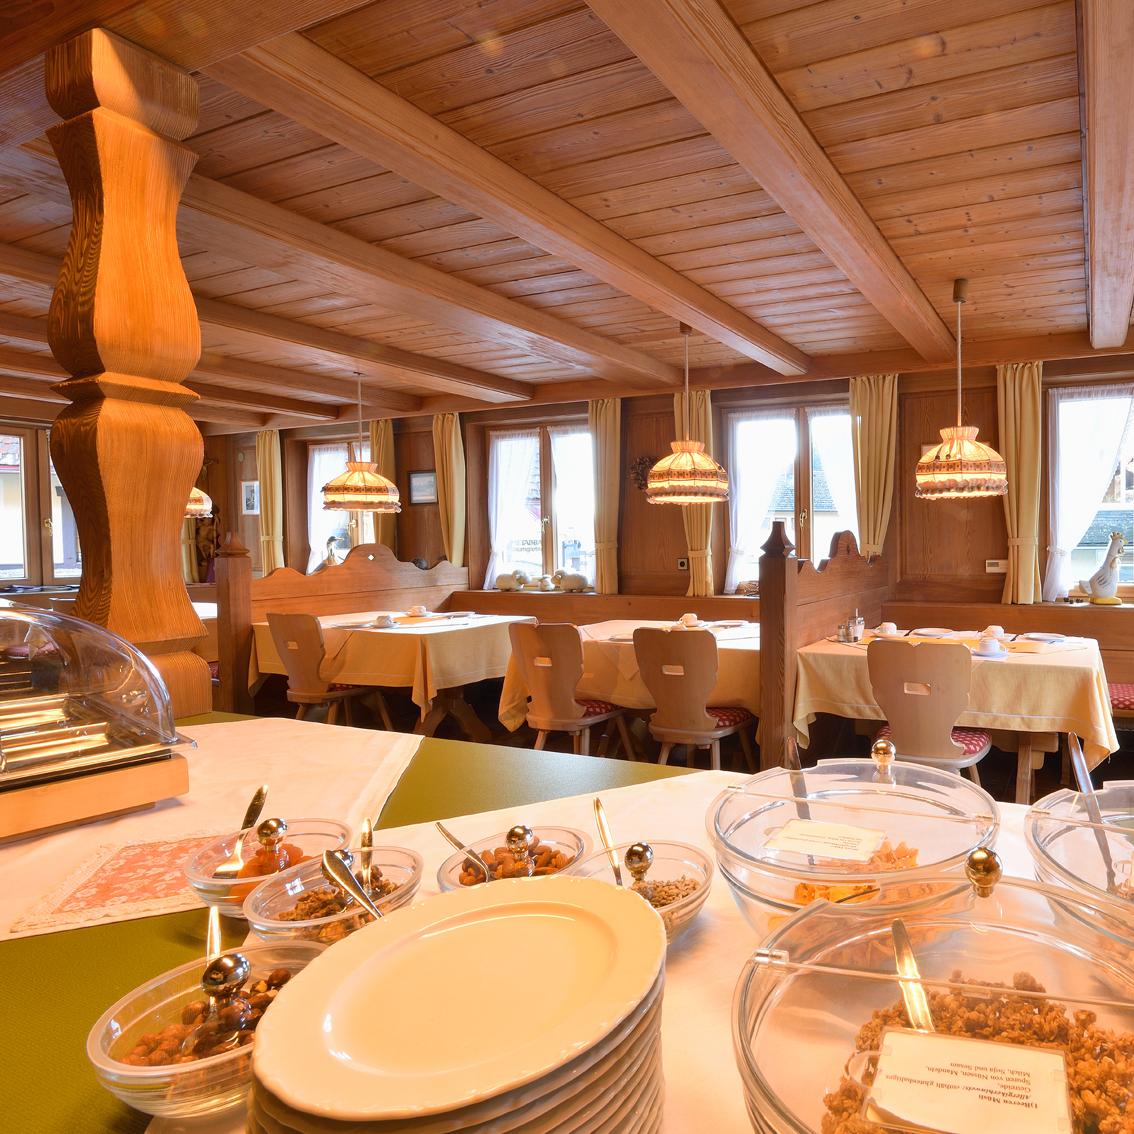 Restaurant "Gästehaus Roseneck" in Todtmoos